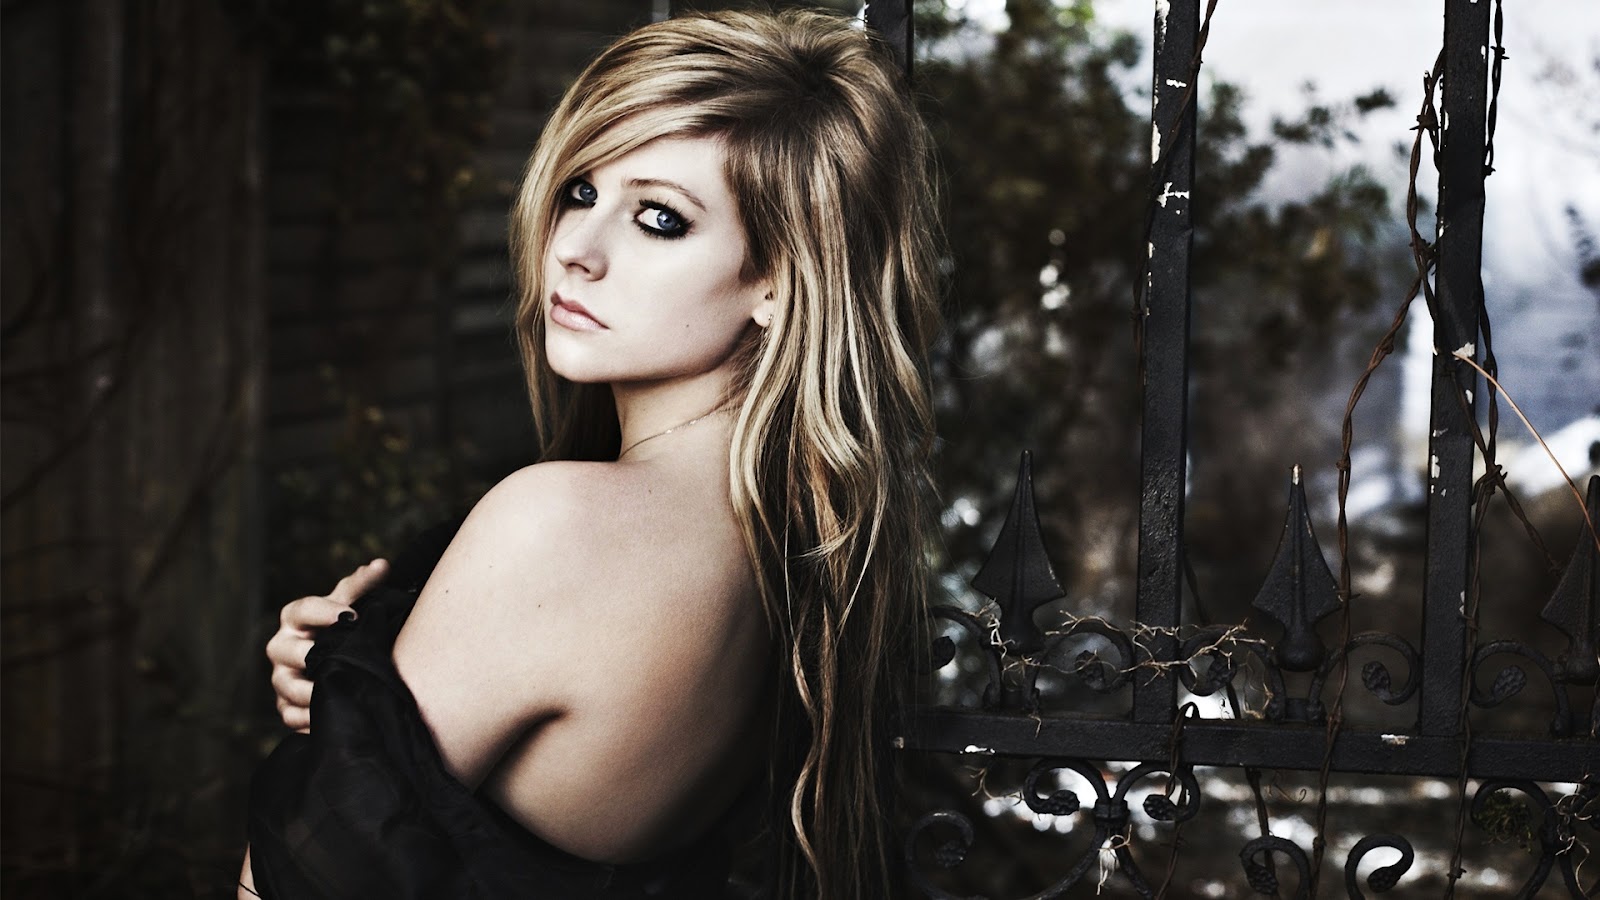 CRAZY WALLPAPER: Avril Lavigne Wallpaper Free Download